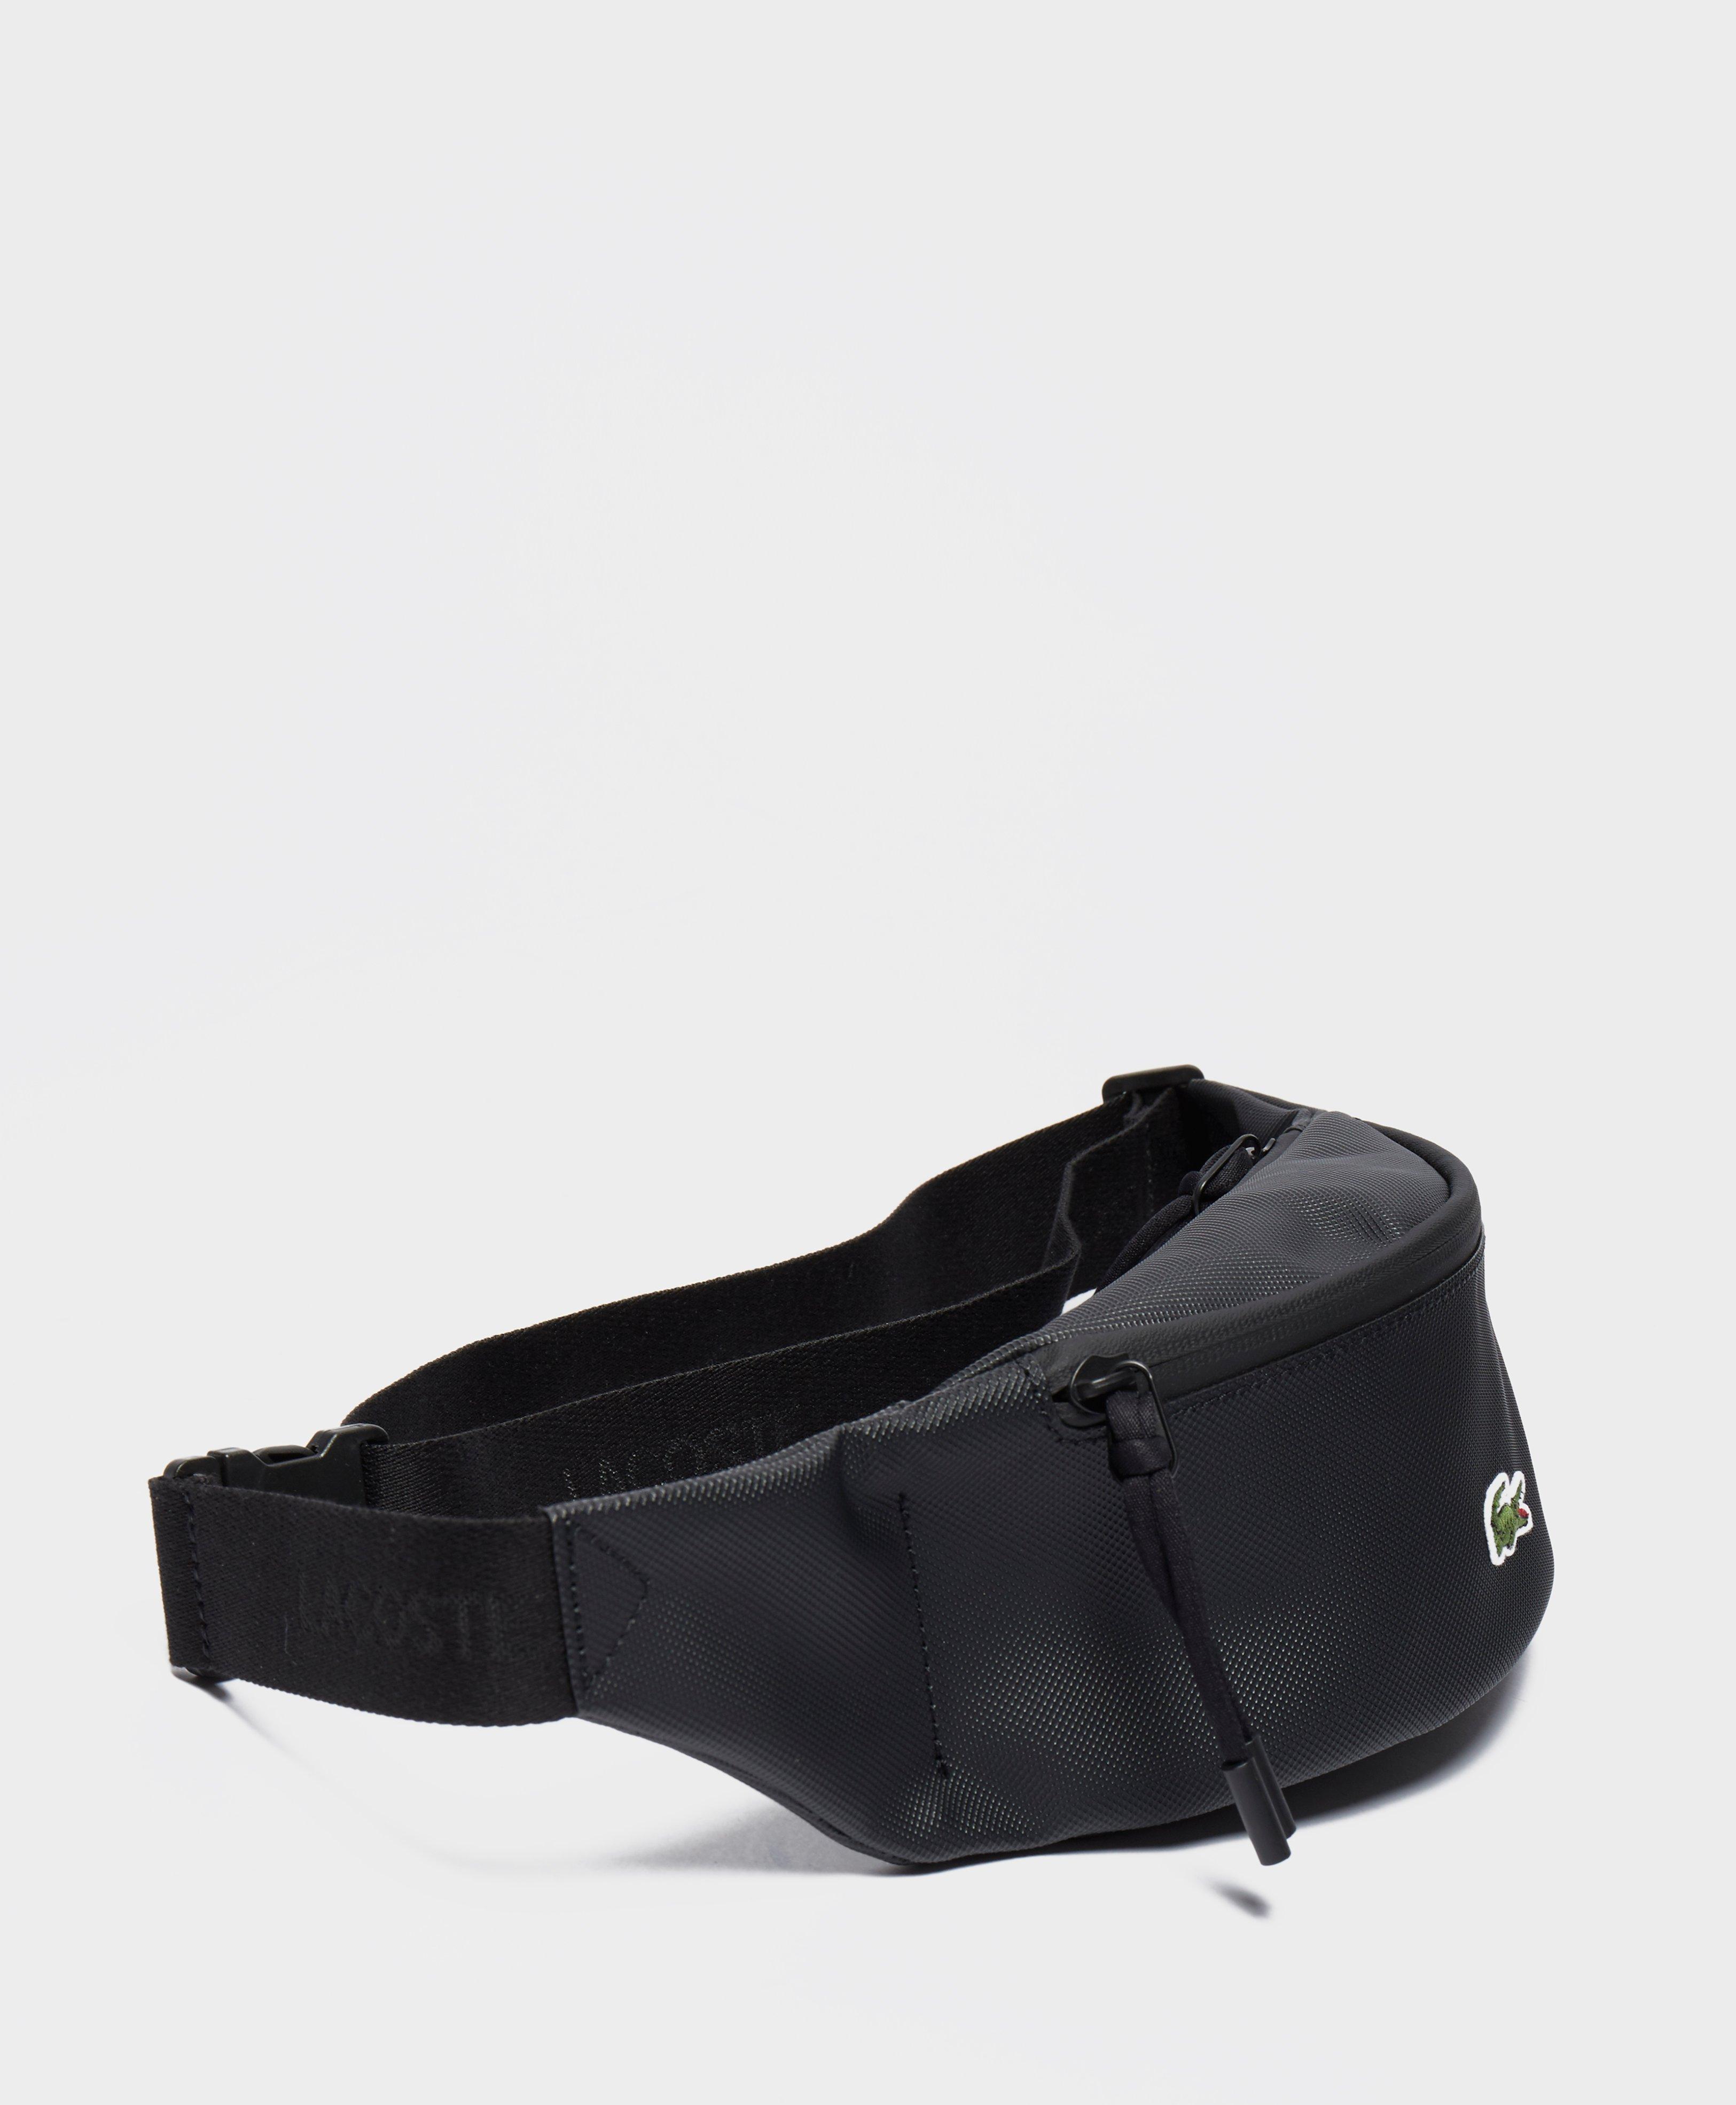 Lacoste Synthetic Croc Bum Bag - Online Exclusive in Black for Men - Lyst